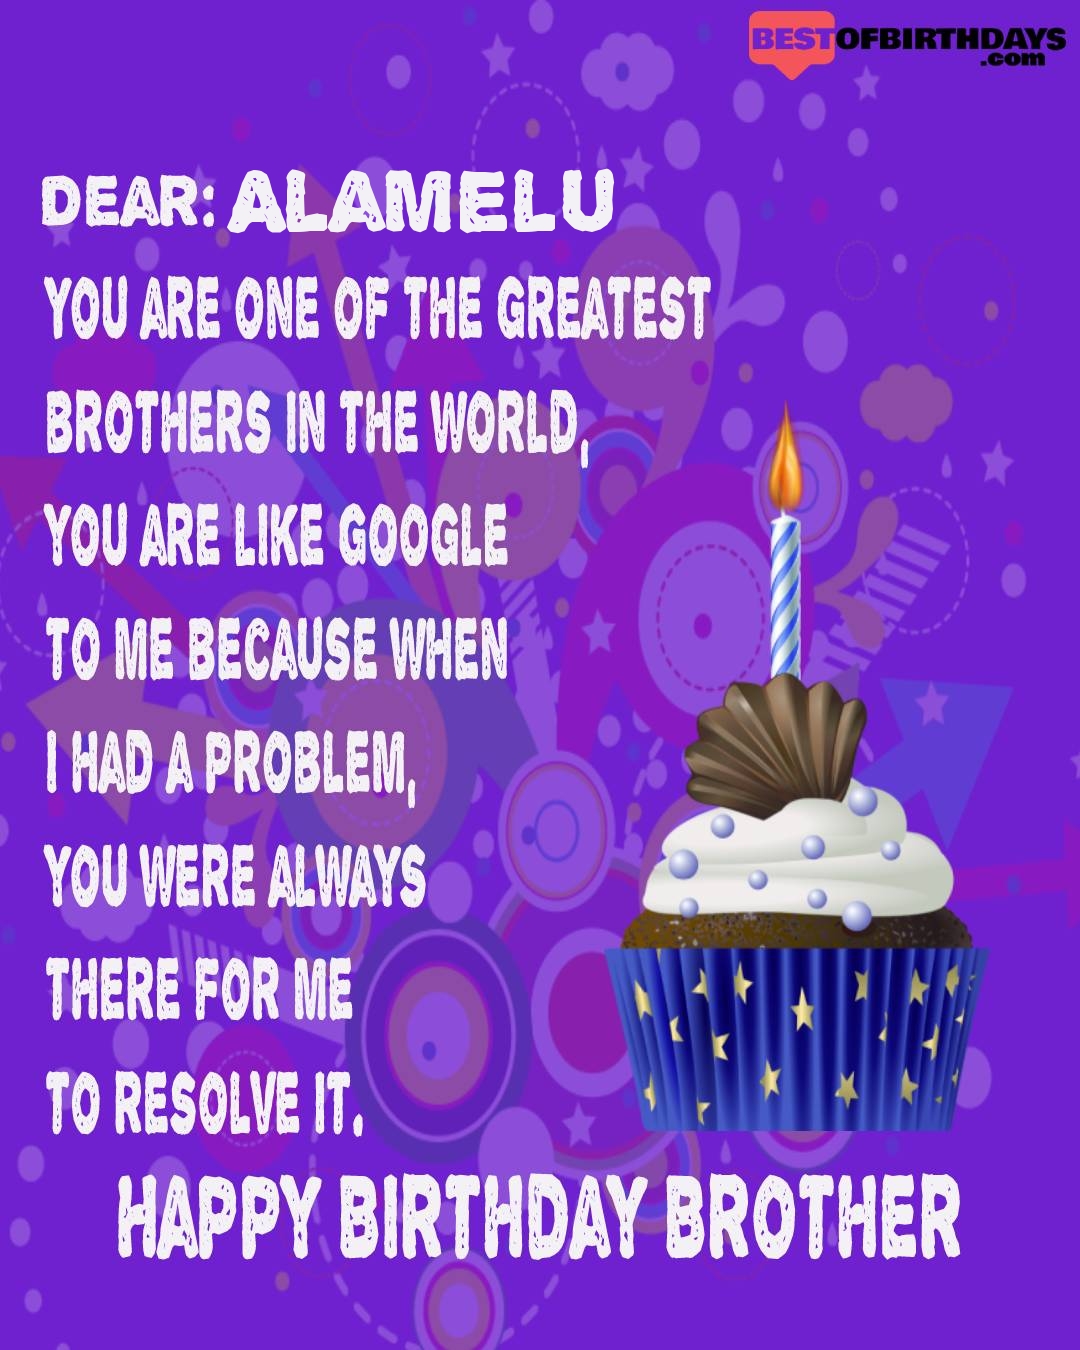 Happy birthday alamelu bhai brother bro